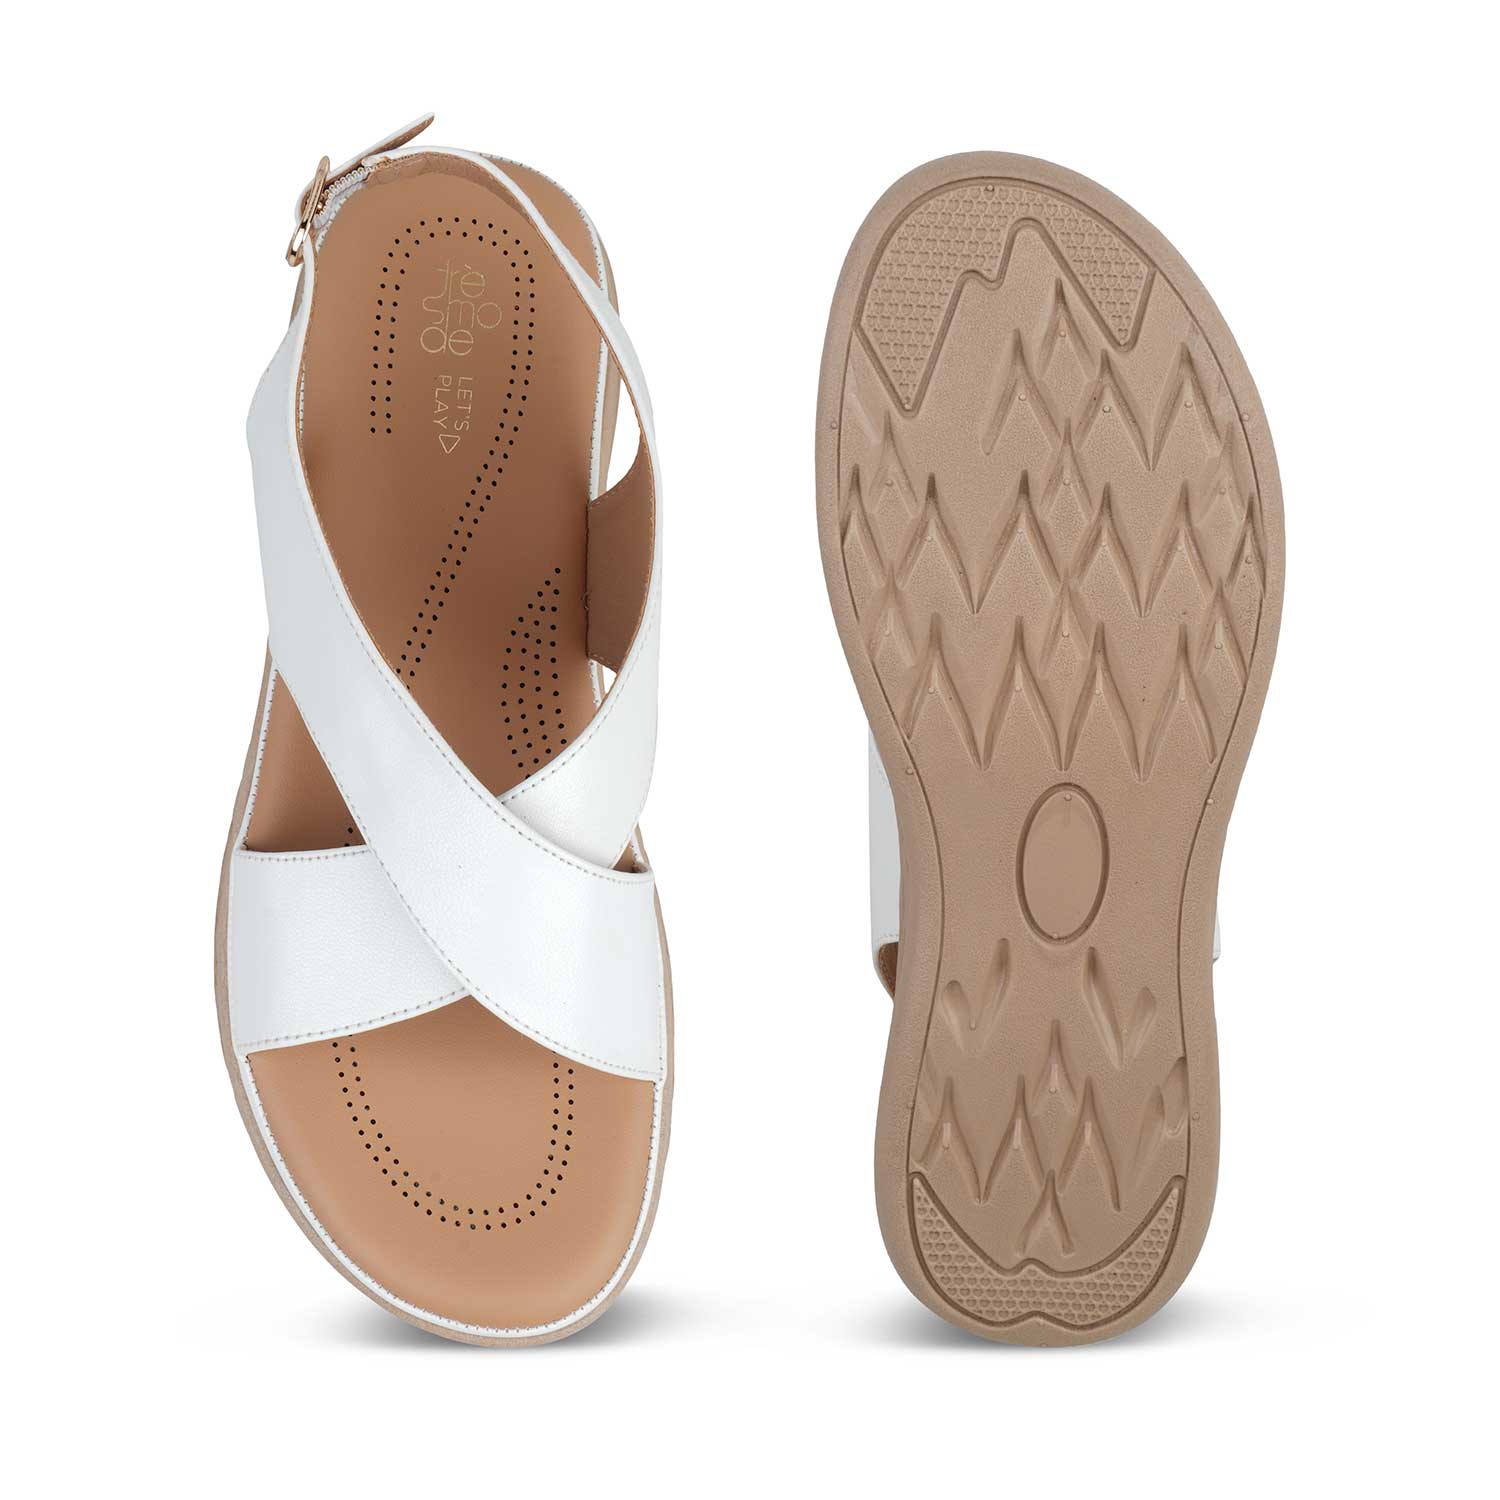 The Havit White Women's Casual Wedge Sandals Tresmode